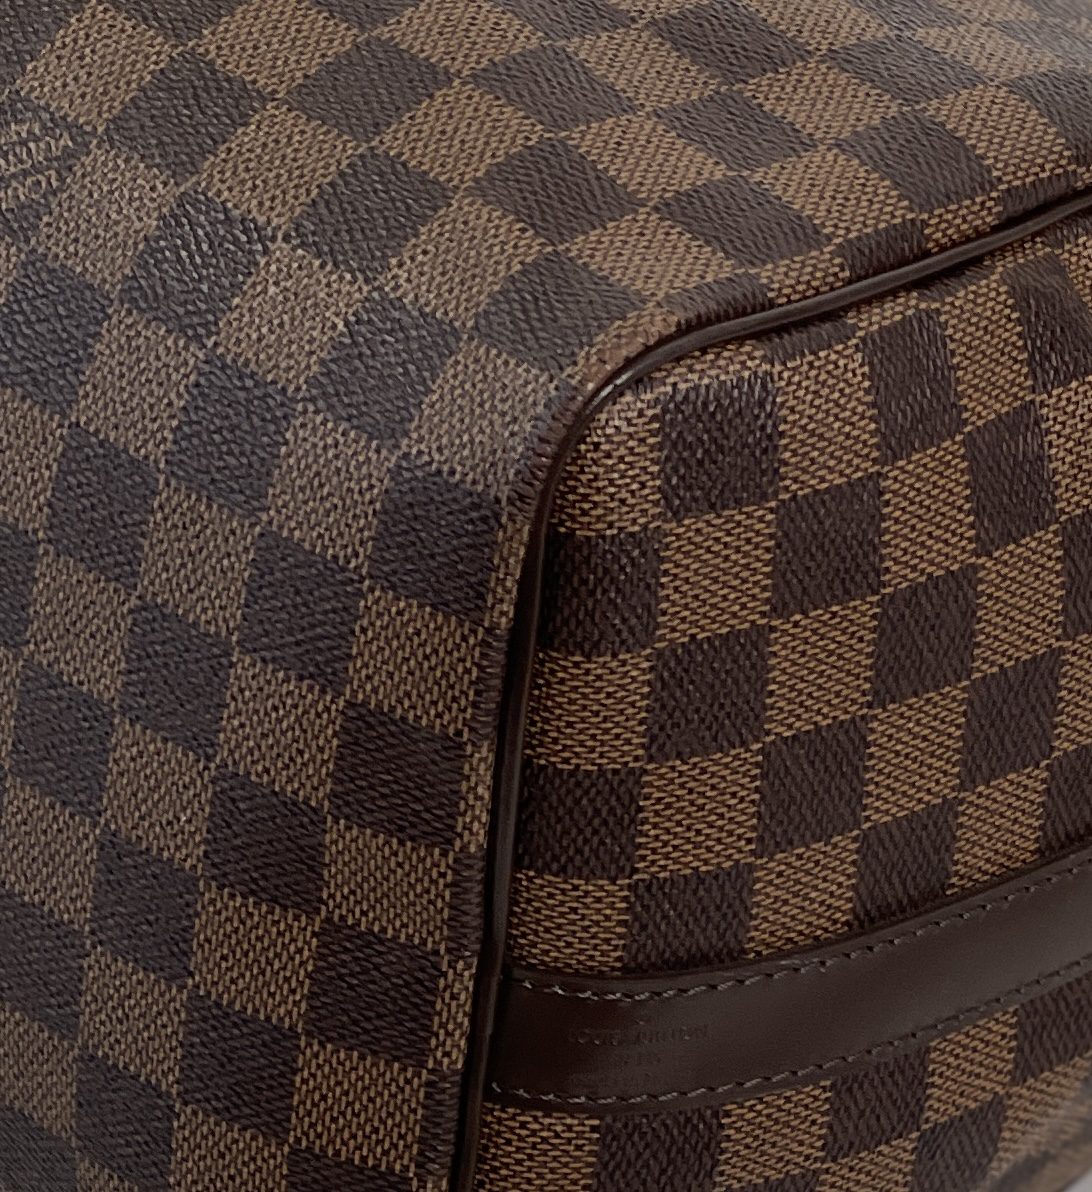 Louis Vuitton Speedy 35 Bandouliere Monogram Canvas Bag